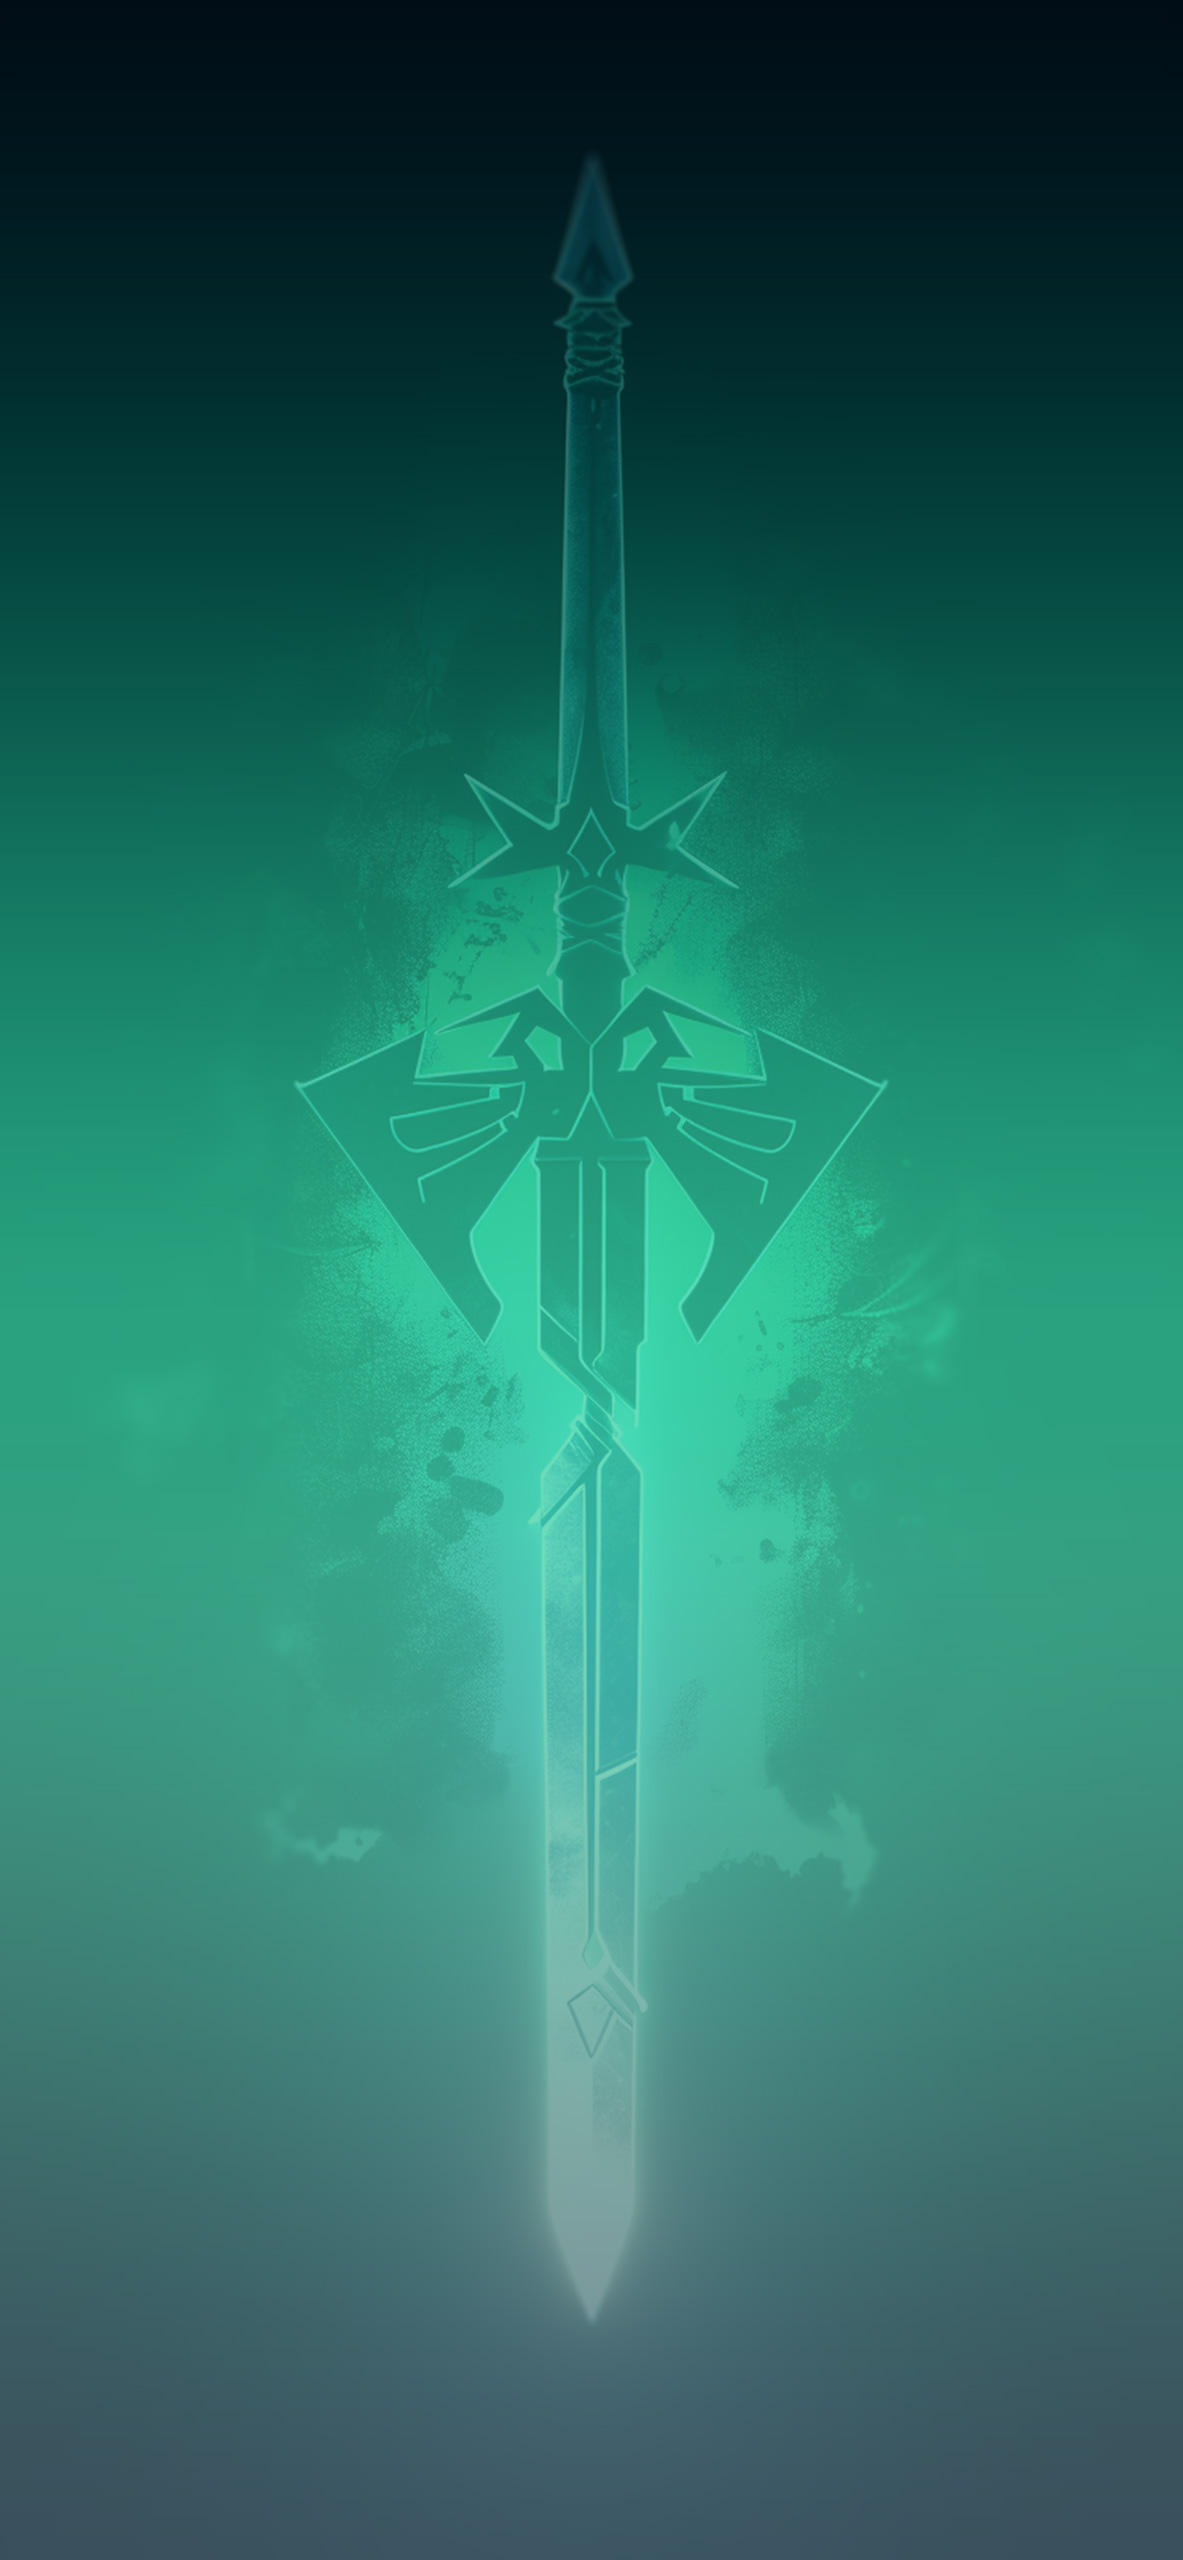 magic sword dark green background